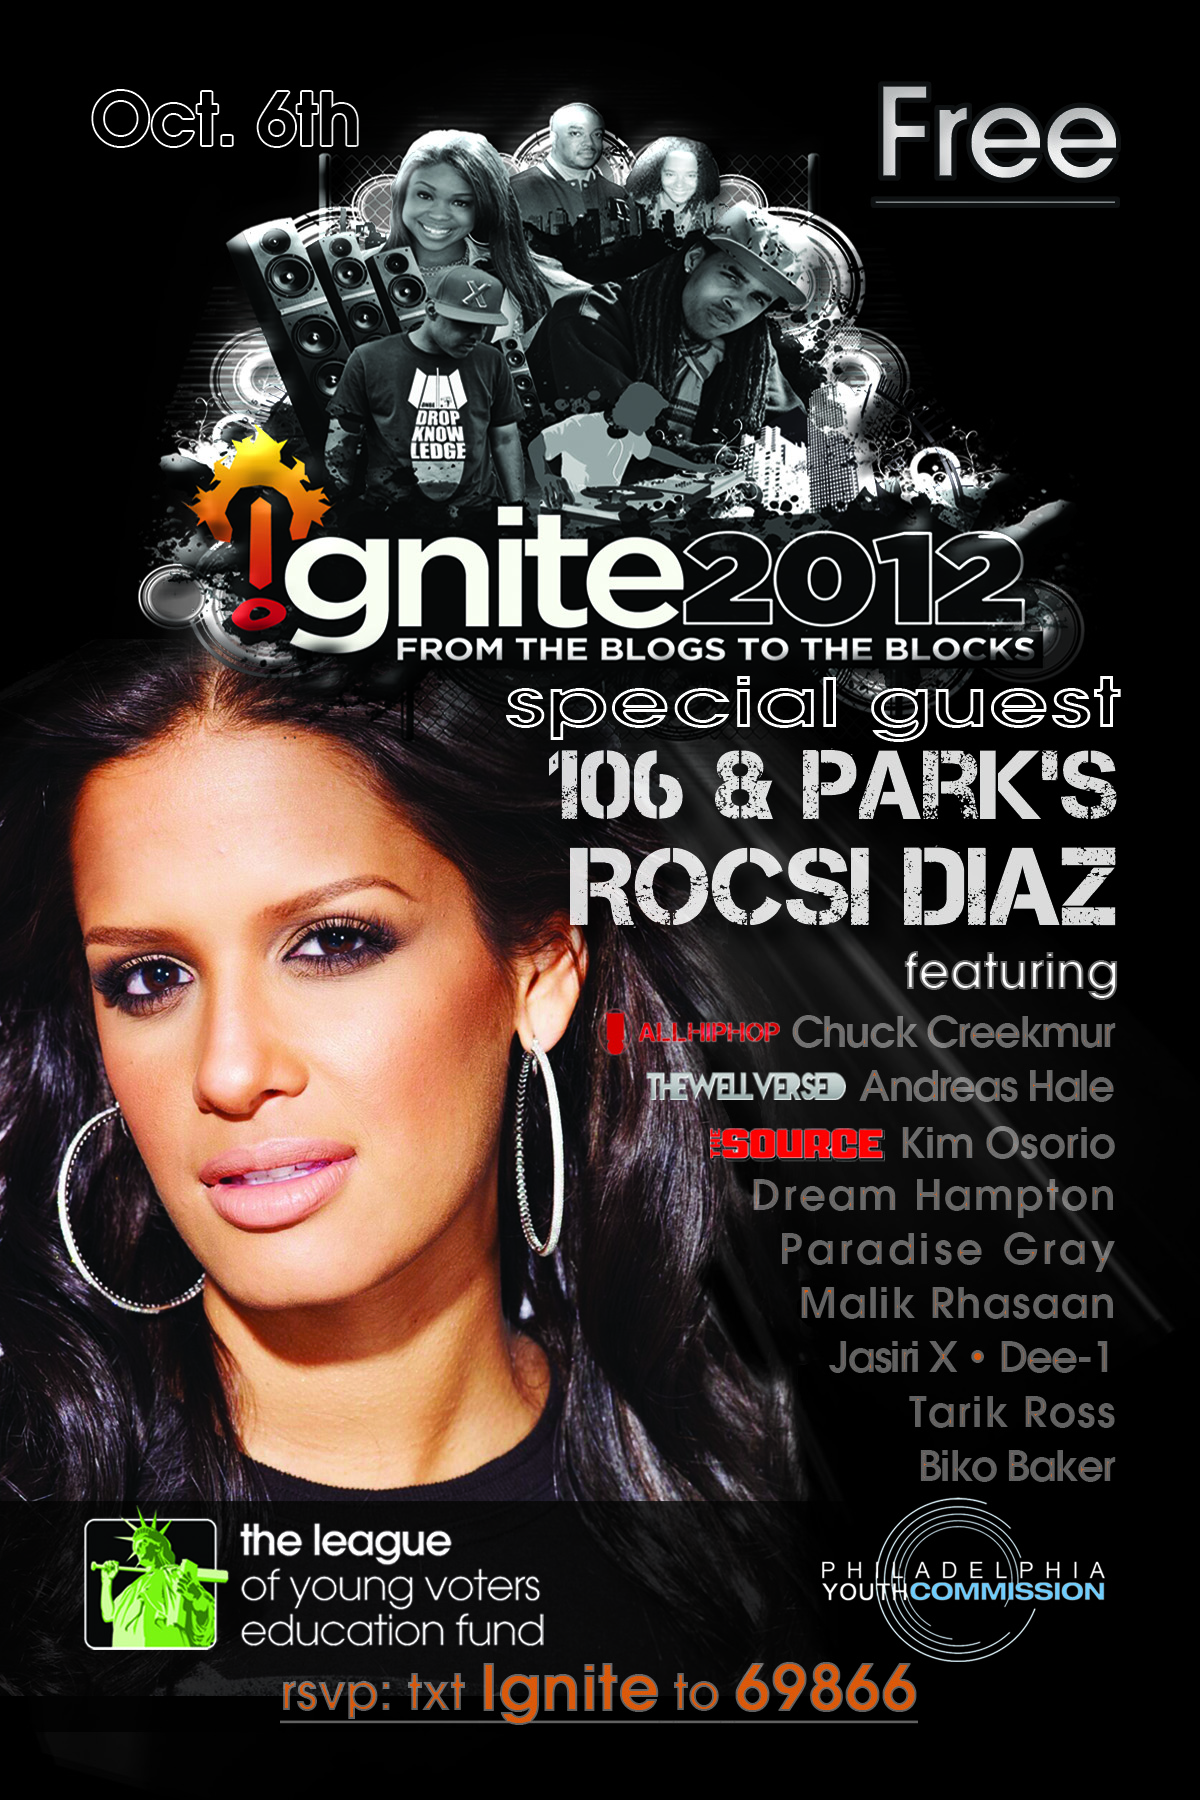 IgnitePhilly.1 #Ignite2012 (Philadelphia) w/ @theleague99 @BikoBaker @HipHopSince1987 @Dee1Music (Livestream) 